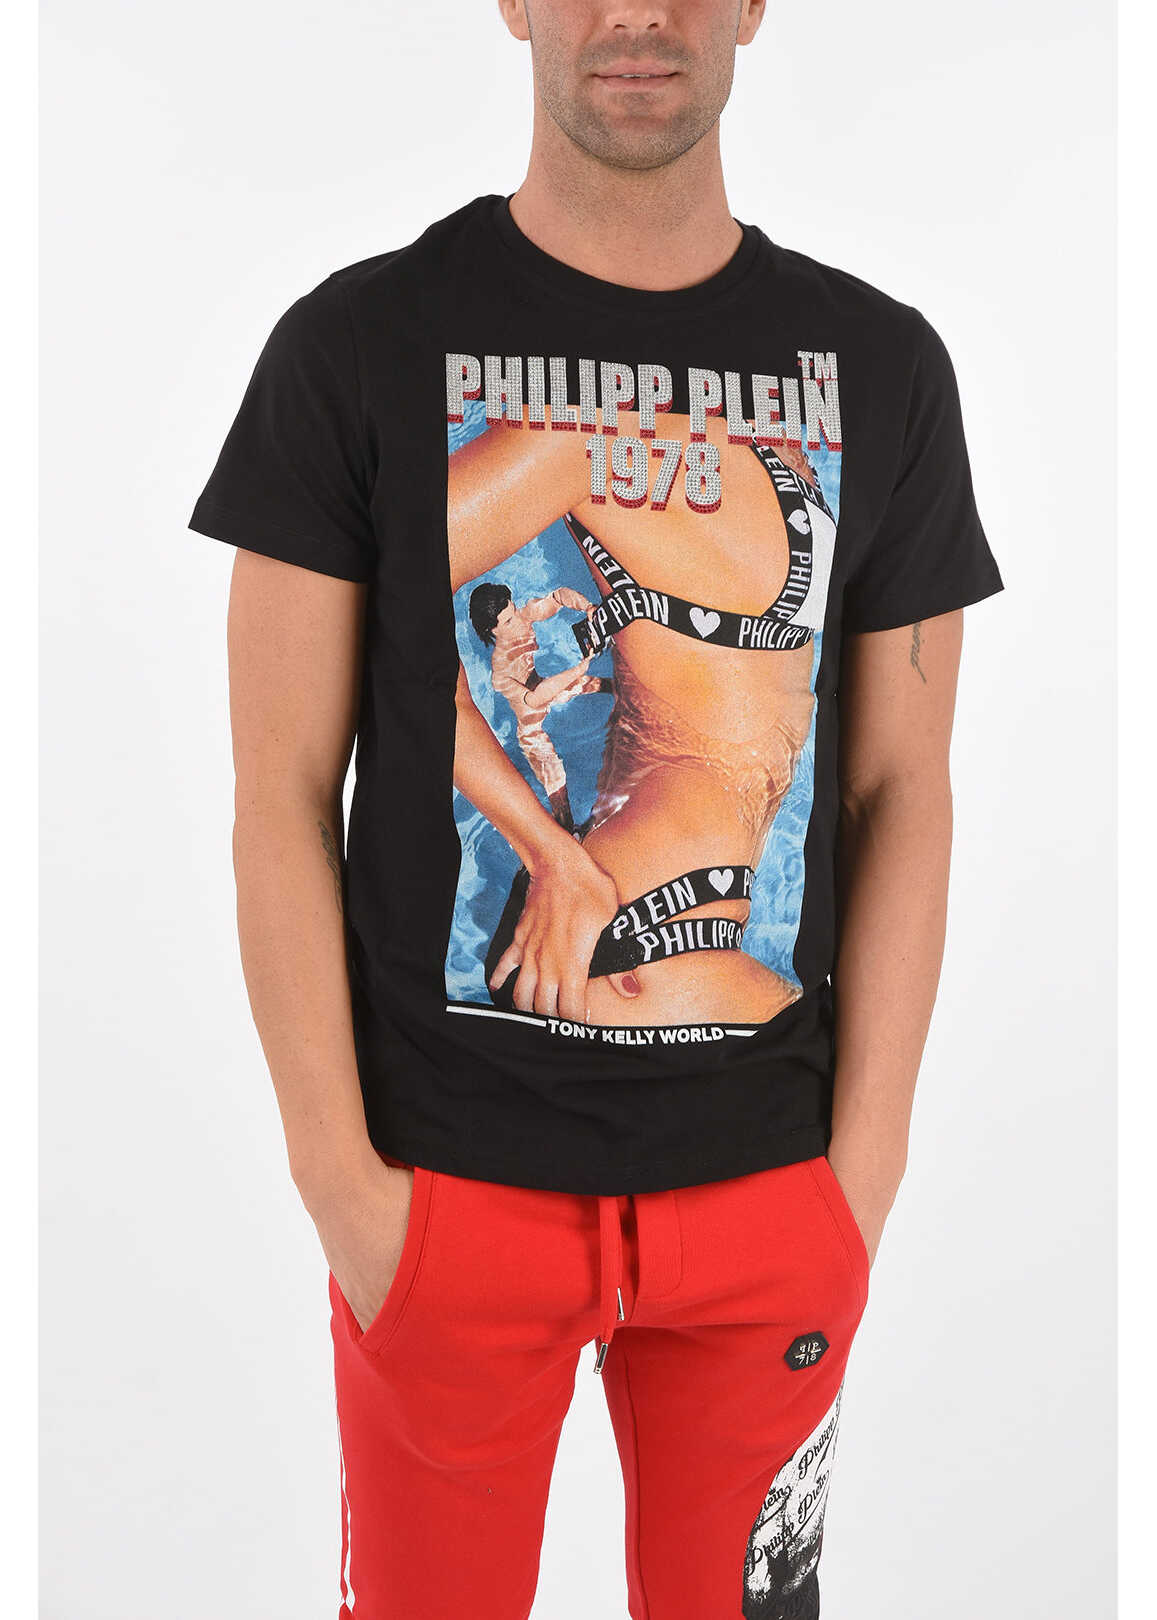 Philipp Plein Platinum Cut Printed Tony Kelly Strass T-Shirt* Black image0